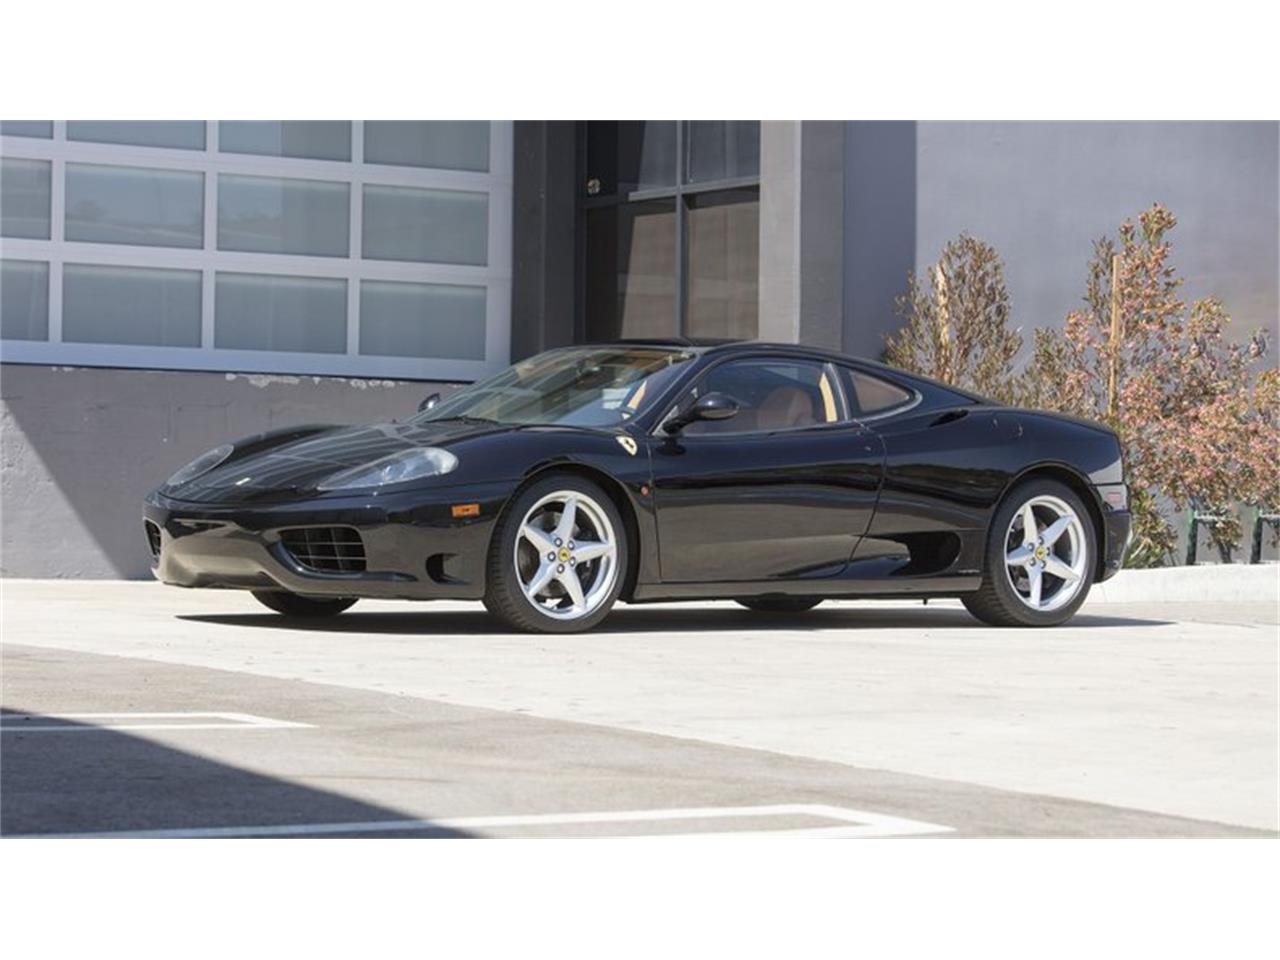 For Sale at Auction: 2000 Ferrari 360 in Monterey, California for sale in Monterey, CA